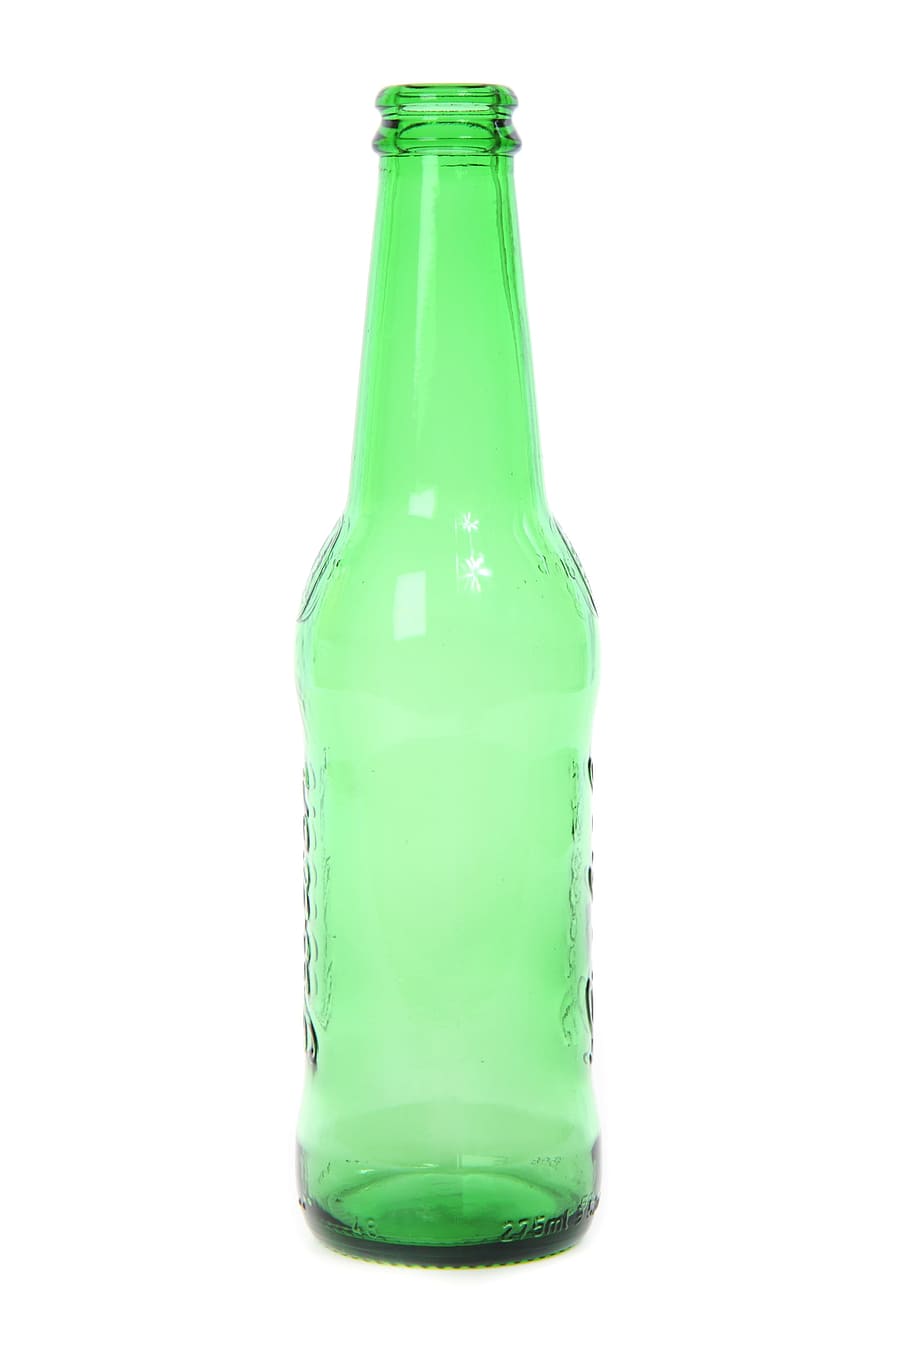 empty, green, translucent, glass bottle, alcohol, beer, bottle, clean, detail, drink